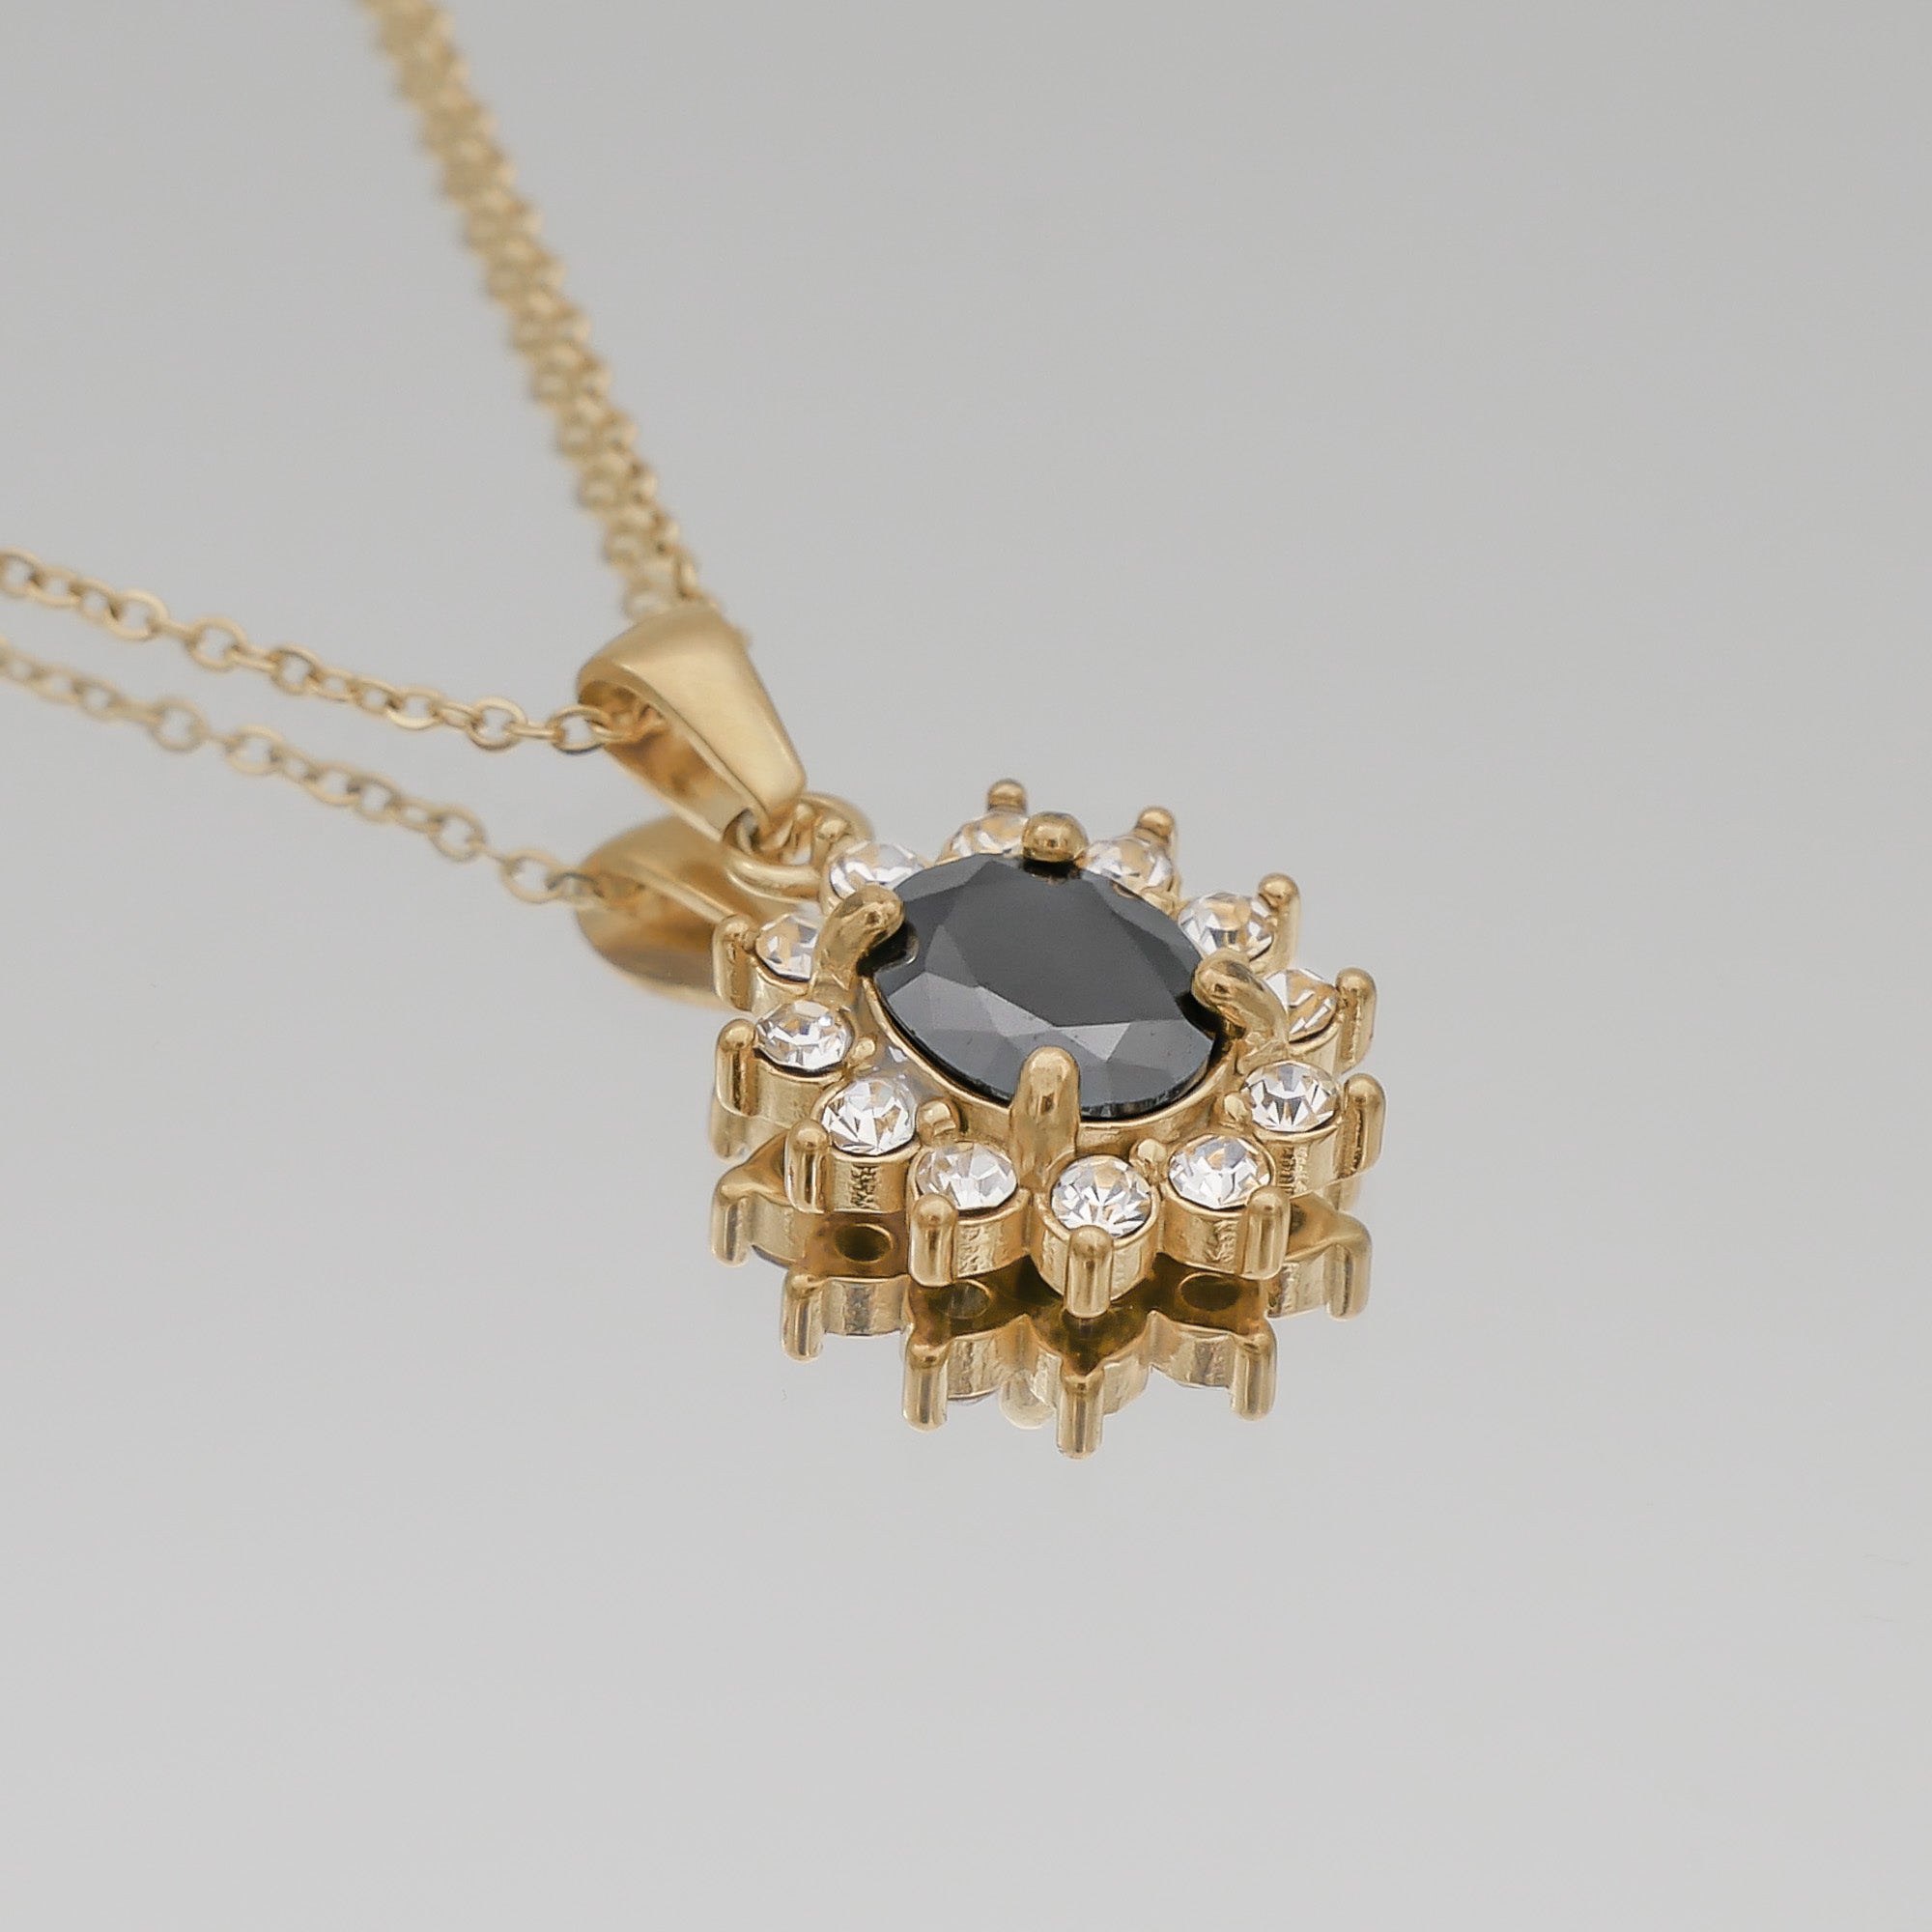 Gold Phoebe Onyx Gemstone Pendant Necklace with encrusted cubic Zirconia stones by PRYA